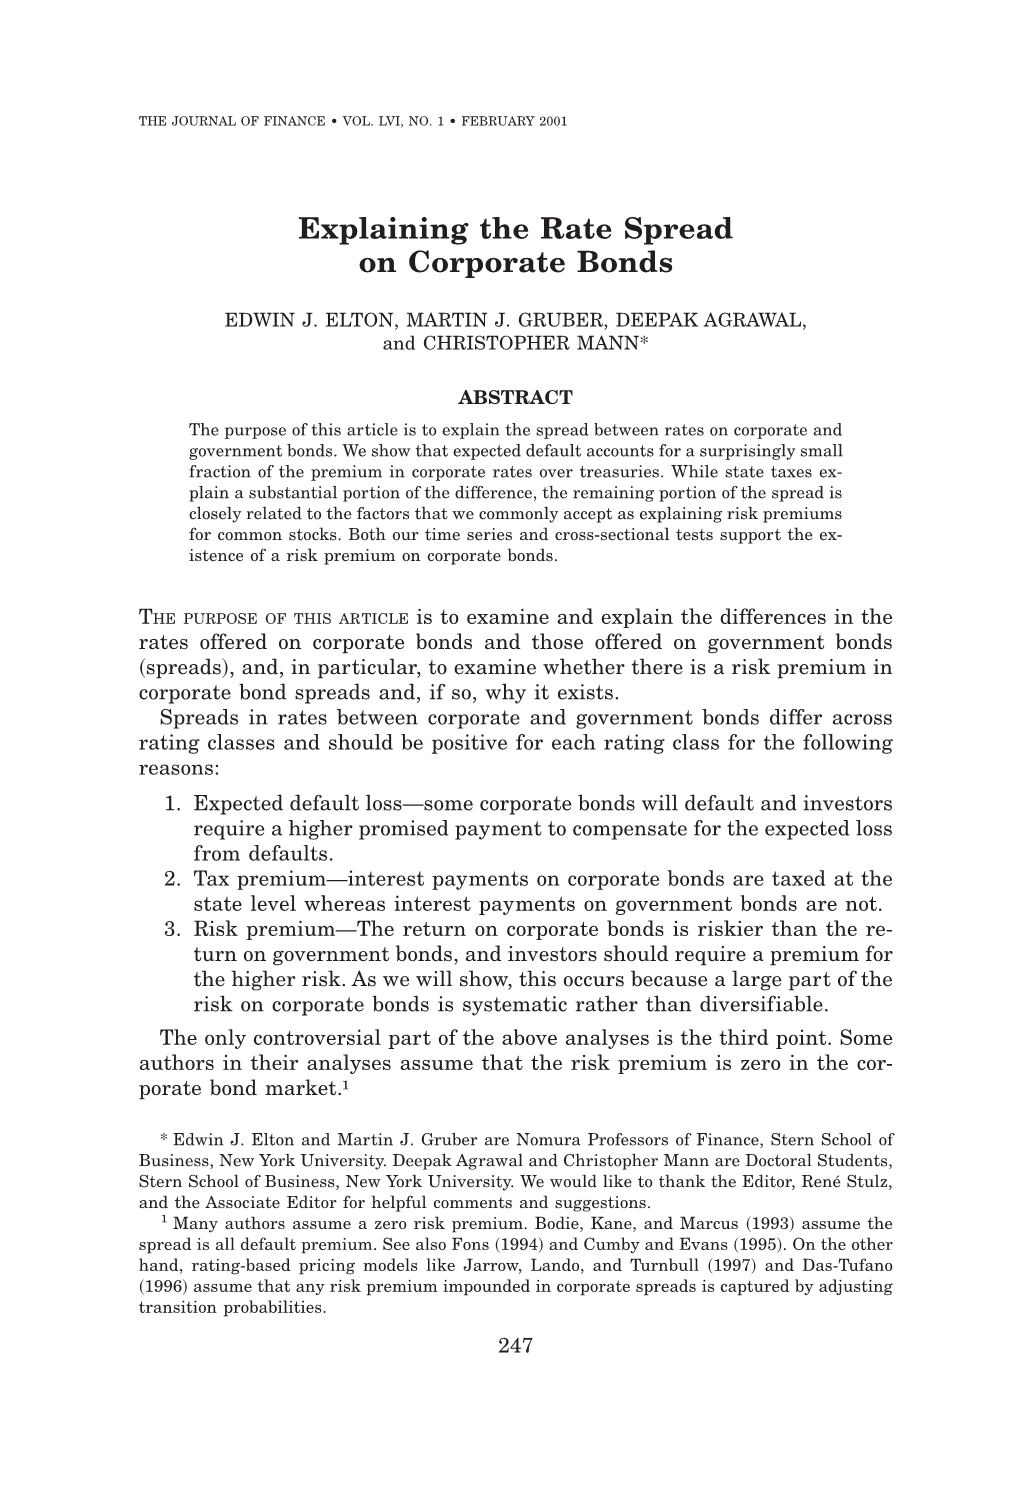 Explaining the Rate Spread on Corporate Bonds